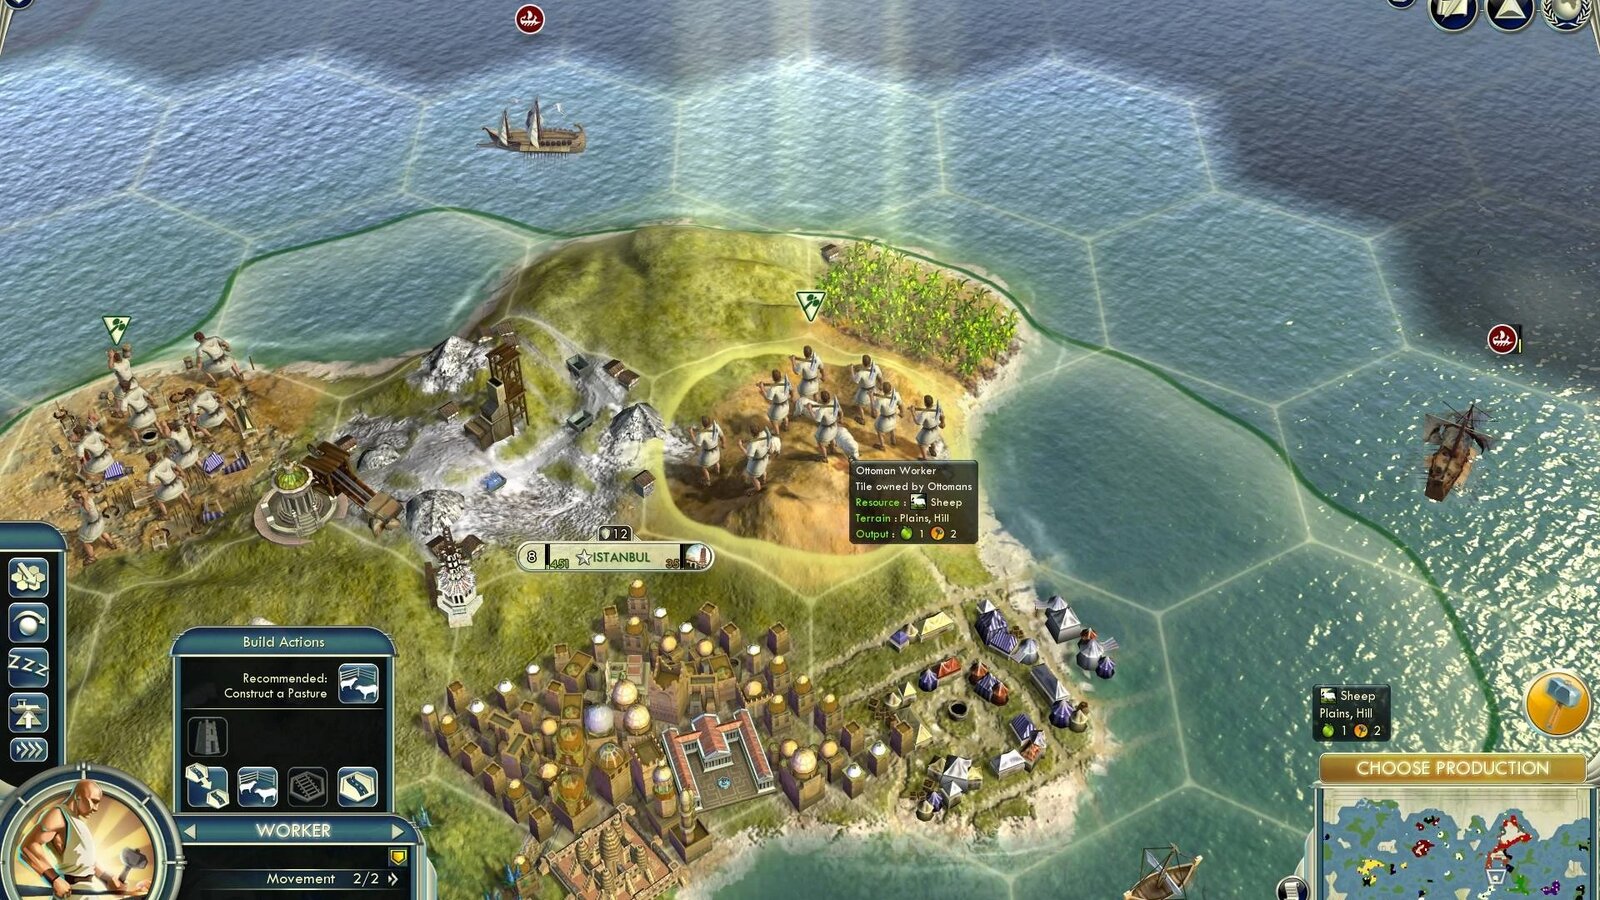 Sid Meier's Civilization V – Brave New World